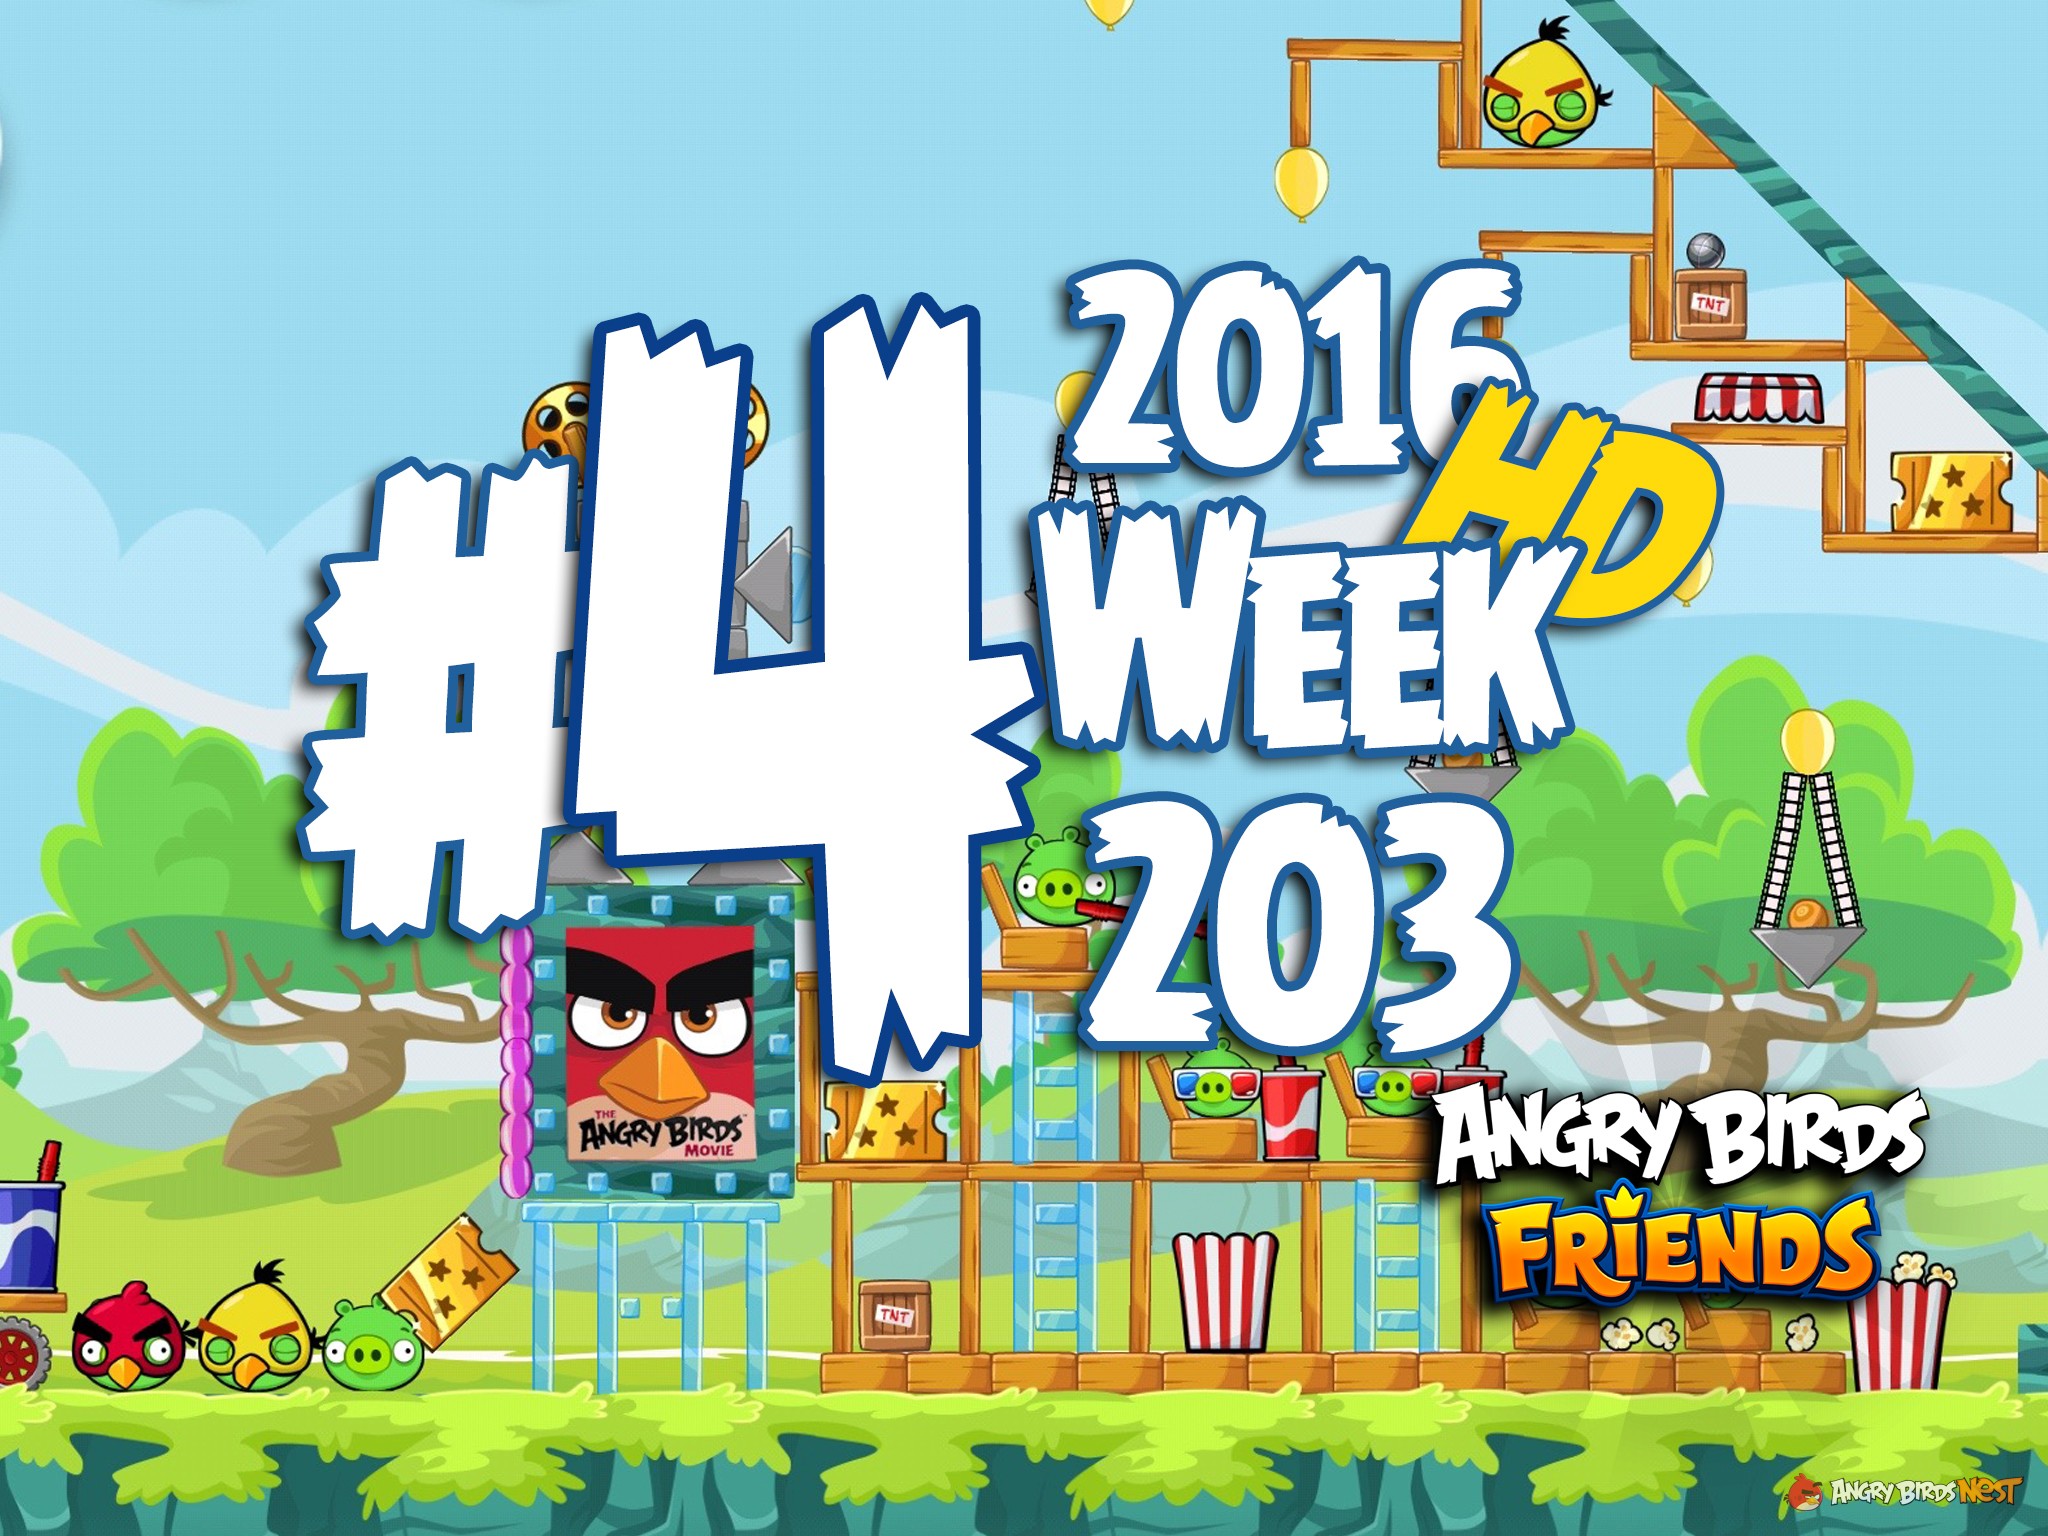 Angry Birds Friends Tournament Level 4 Week 203 Walkthrough | March 31st 2016